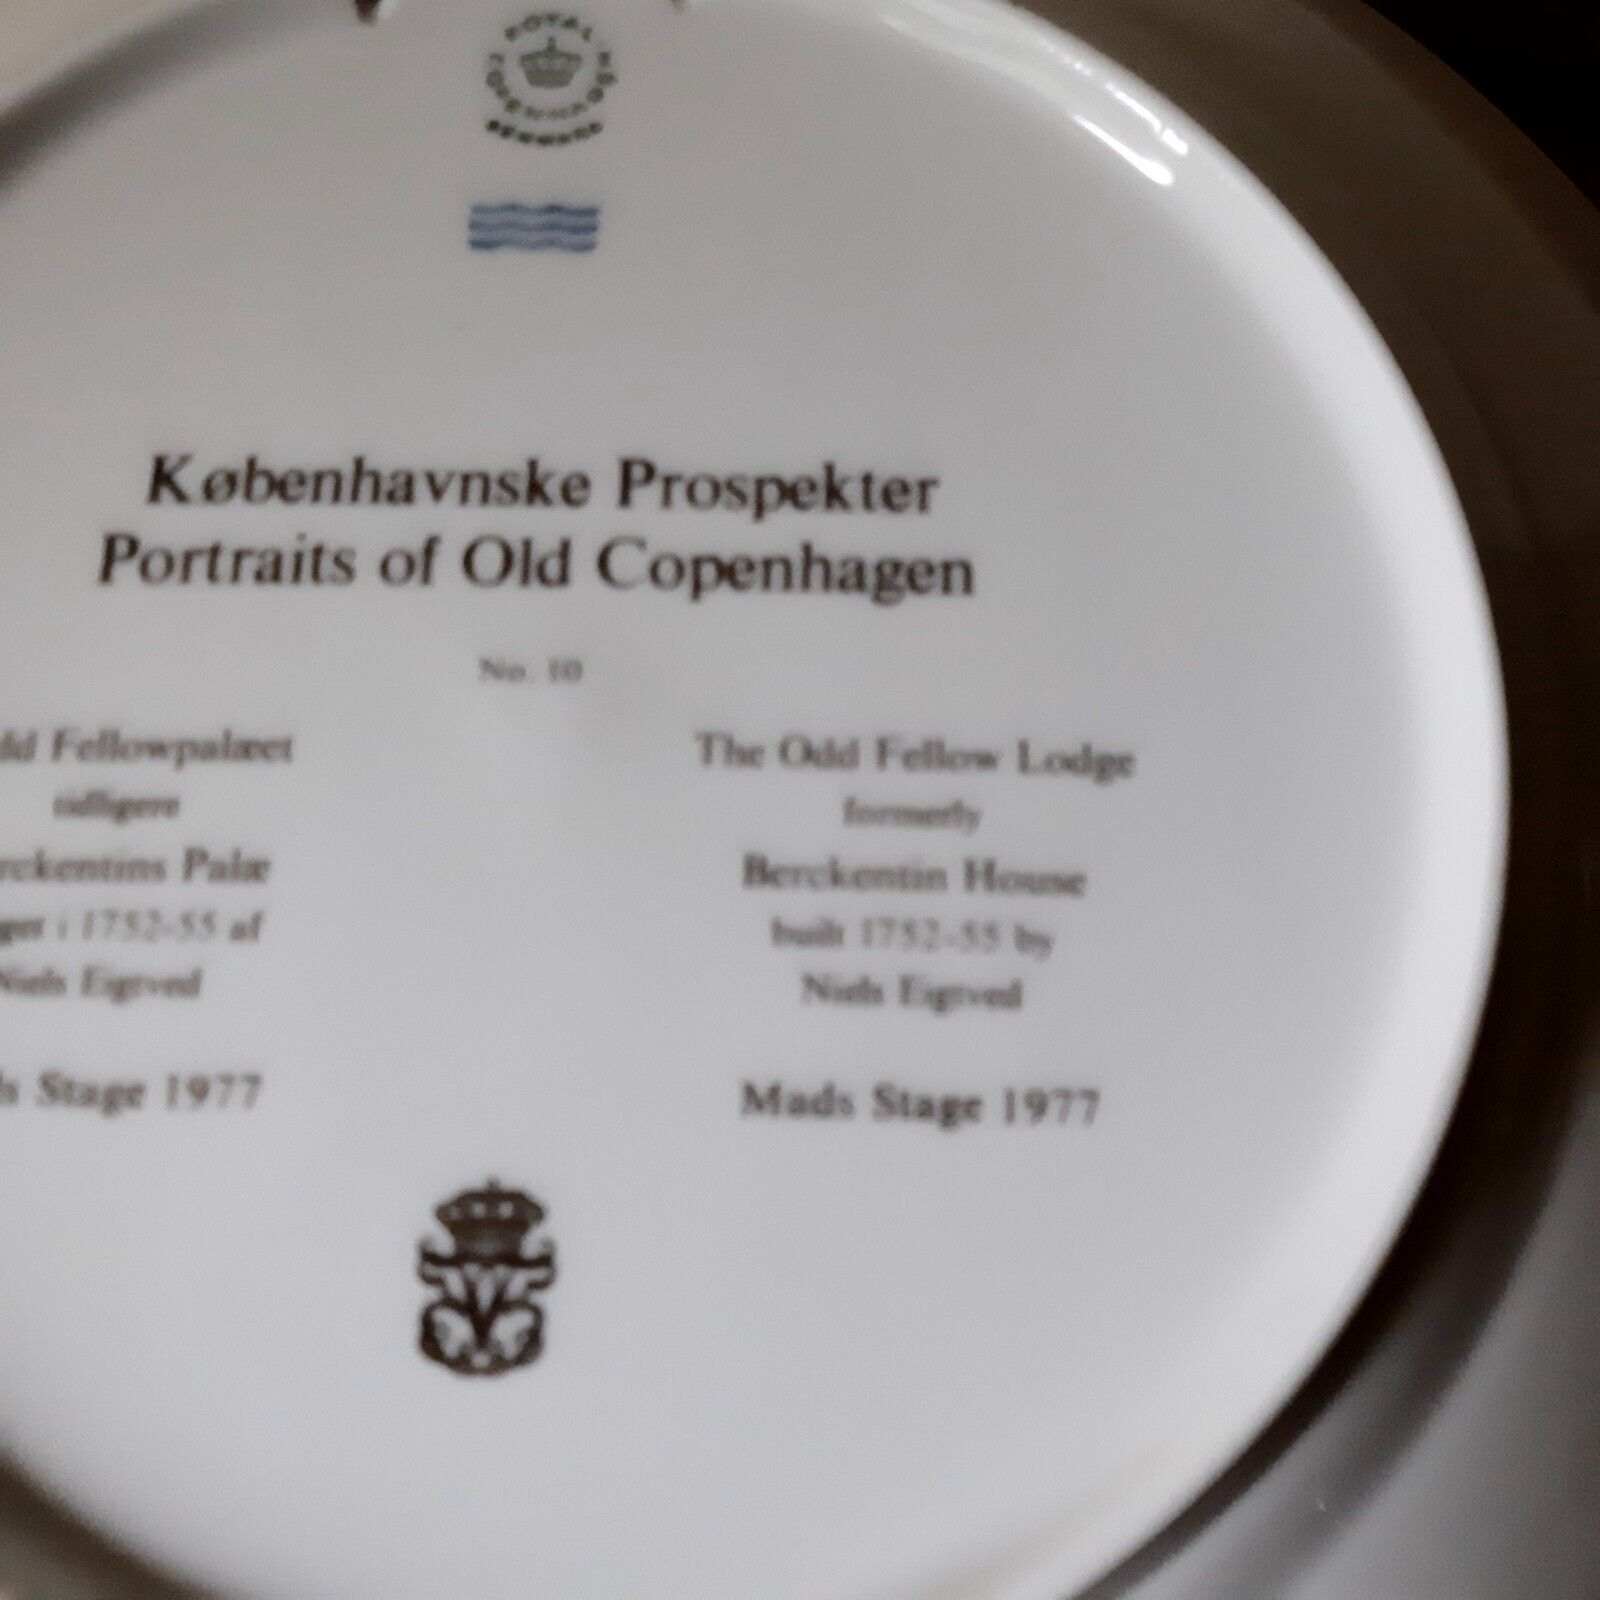 Portraits of Old Copenhagen Plate # 10 ROYAL COPENHAGEN The Odd Fellow Lodge